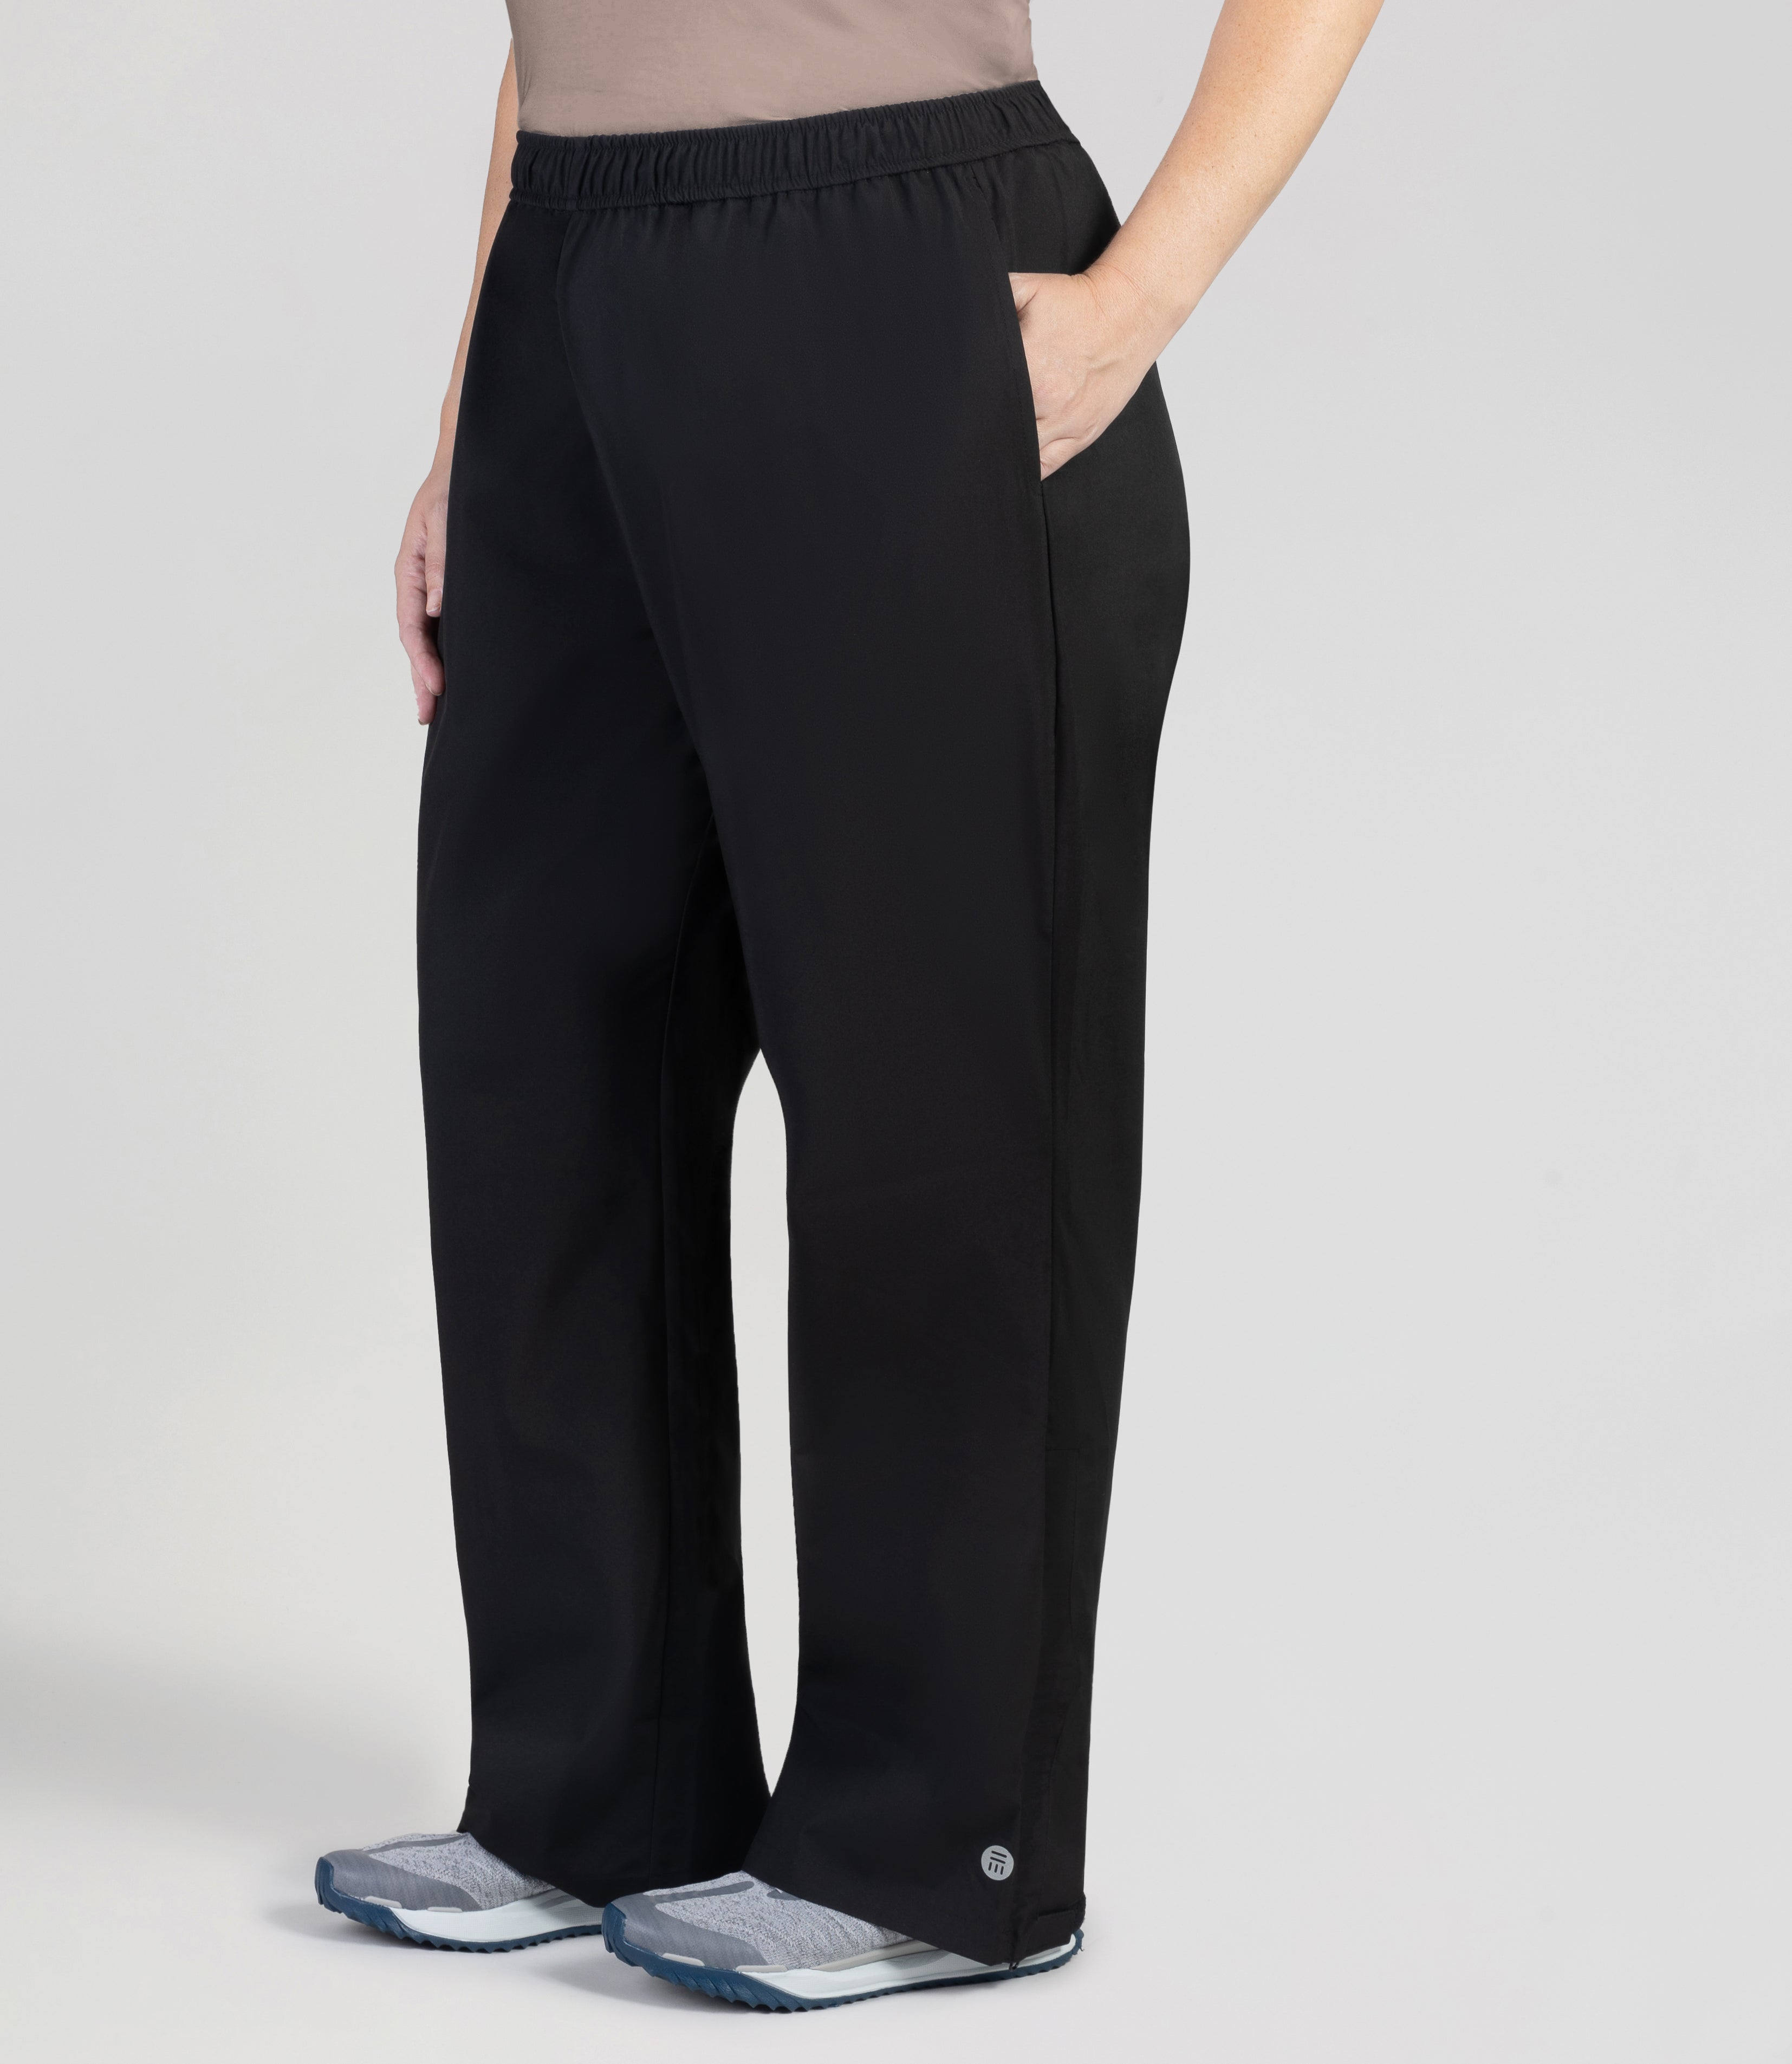  Plus Size Petite Yoga Pants with Pockets Elastic